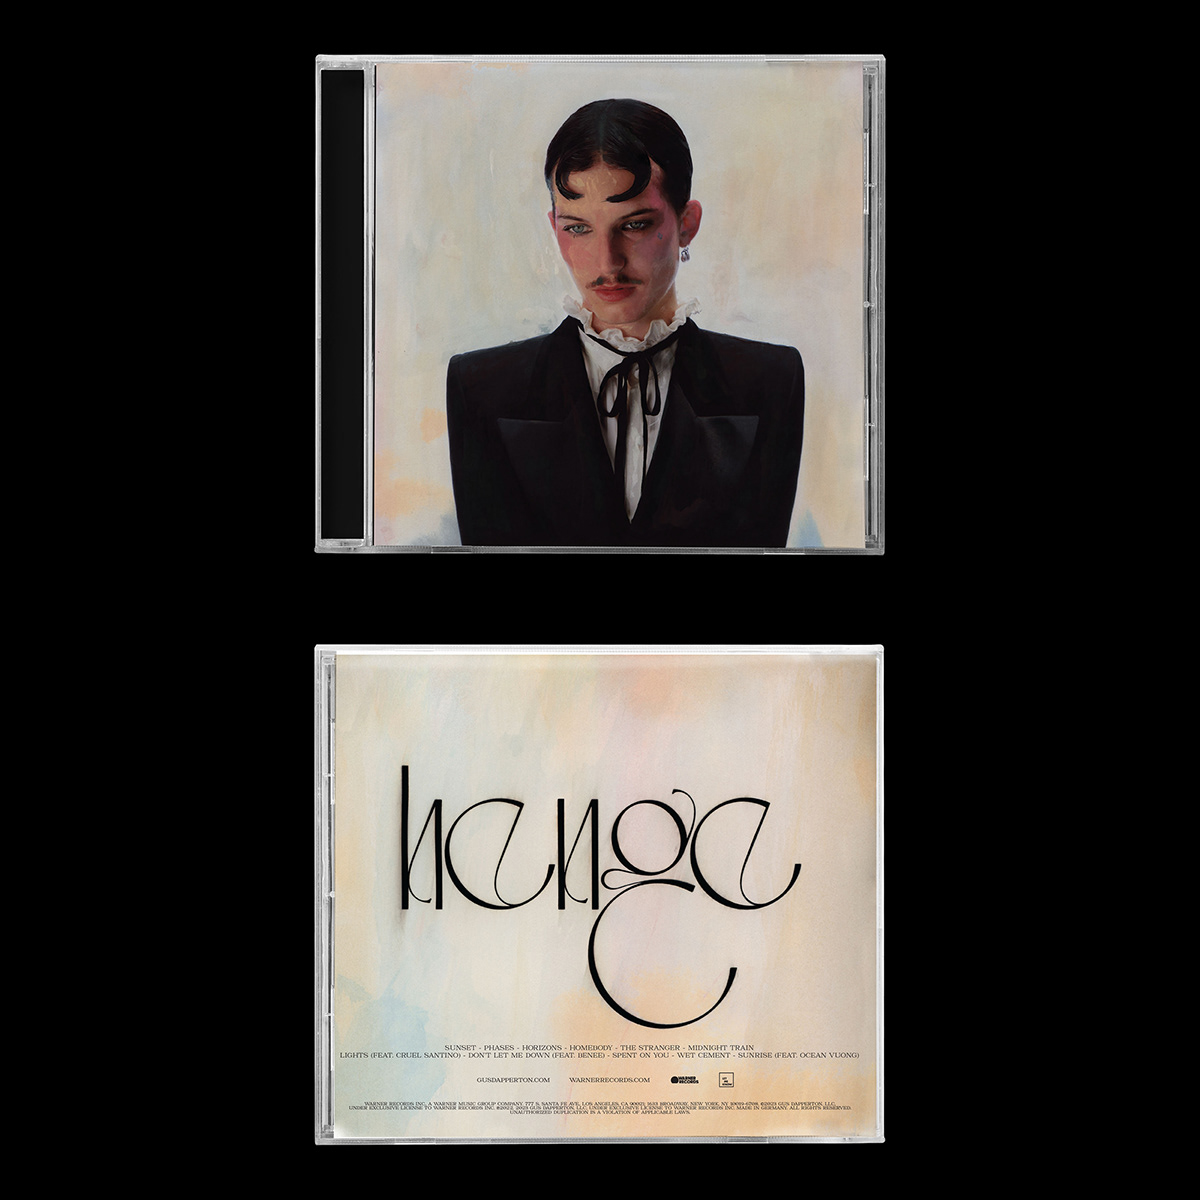 vinyl music artwork gus dapperton Layout Layout Design print editorial cd